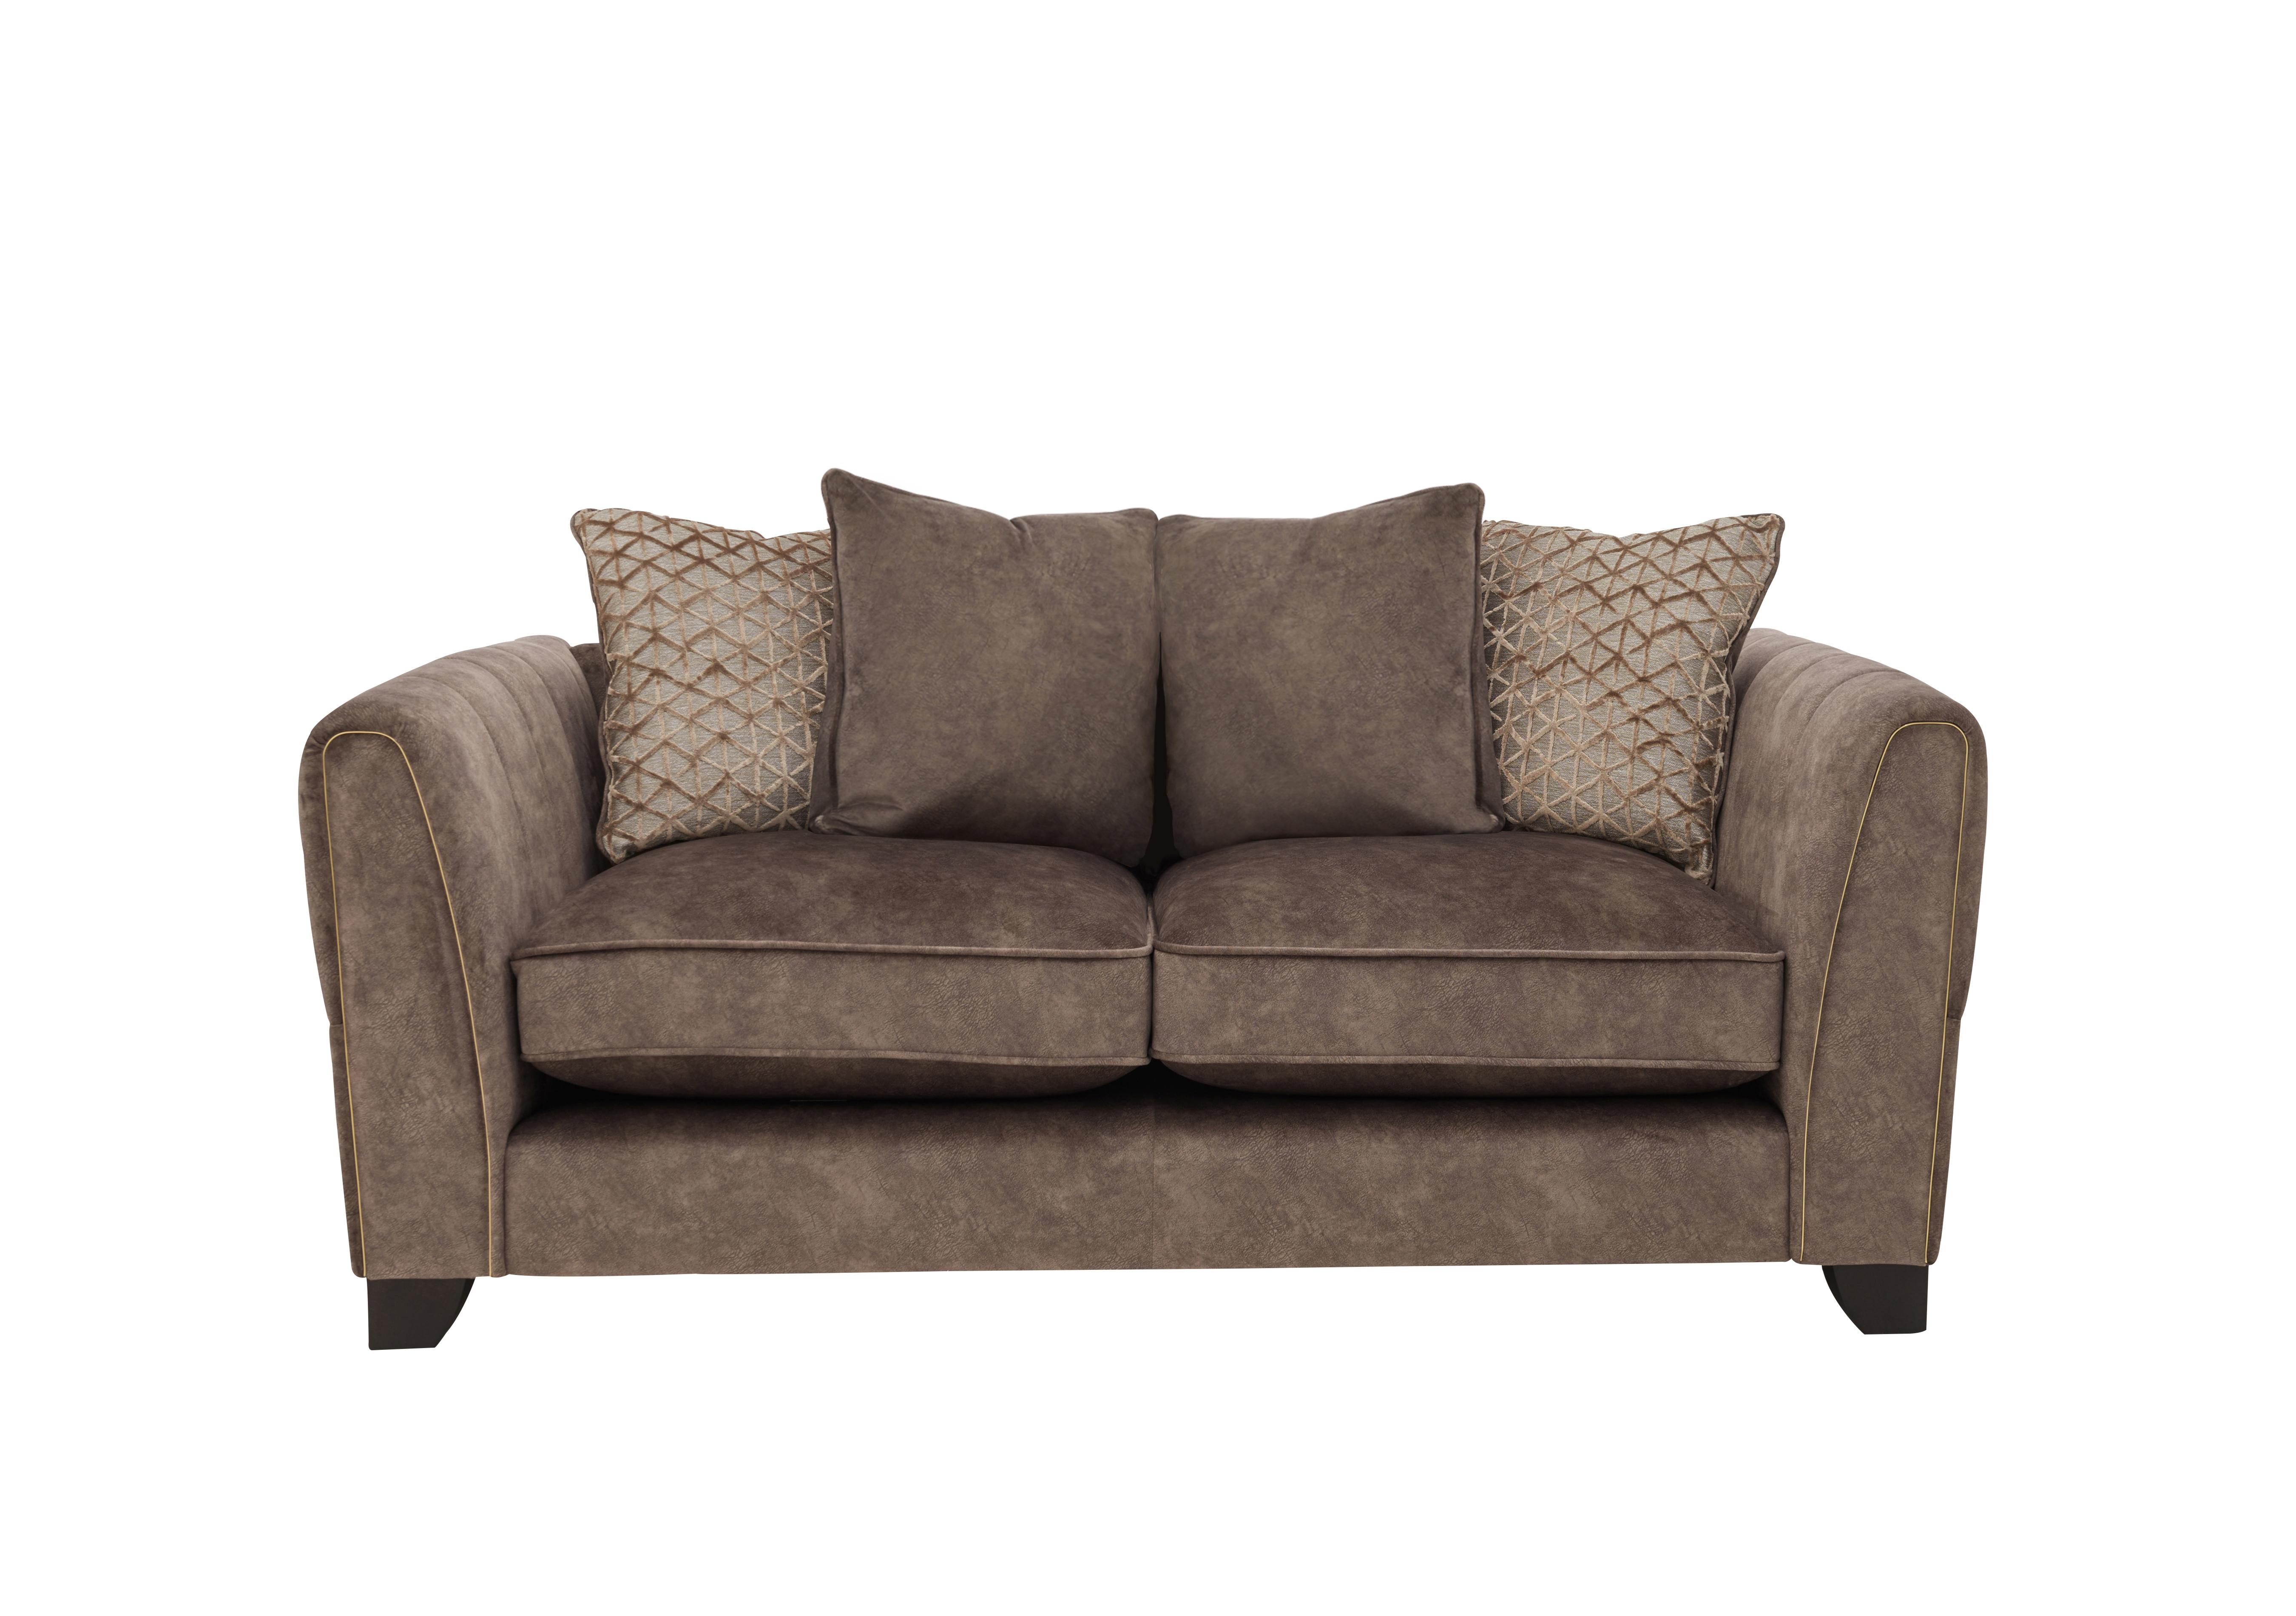 Ariana 2 Seater Fabric Pillow Back Sofa in Dapple Chocolate Brass Insert on Furniture Village